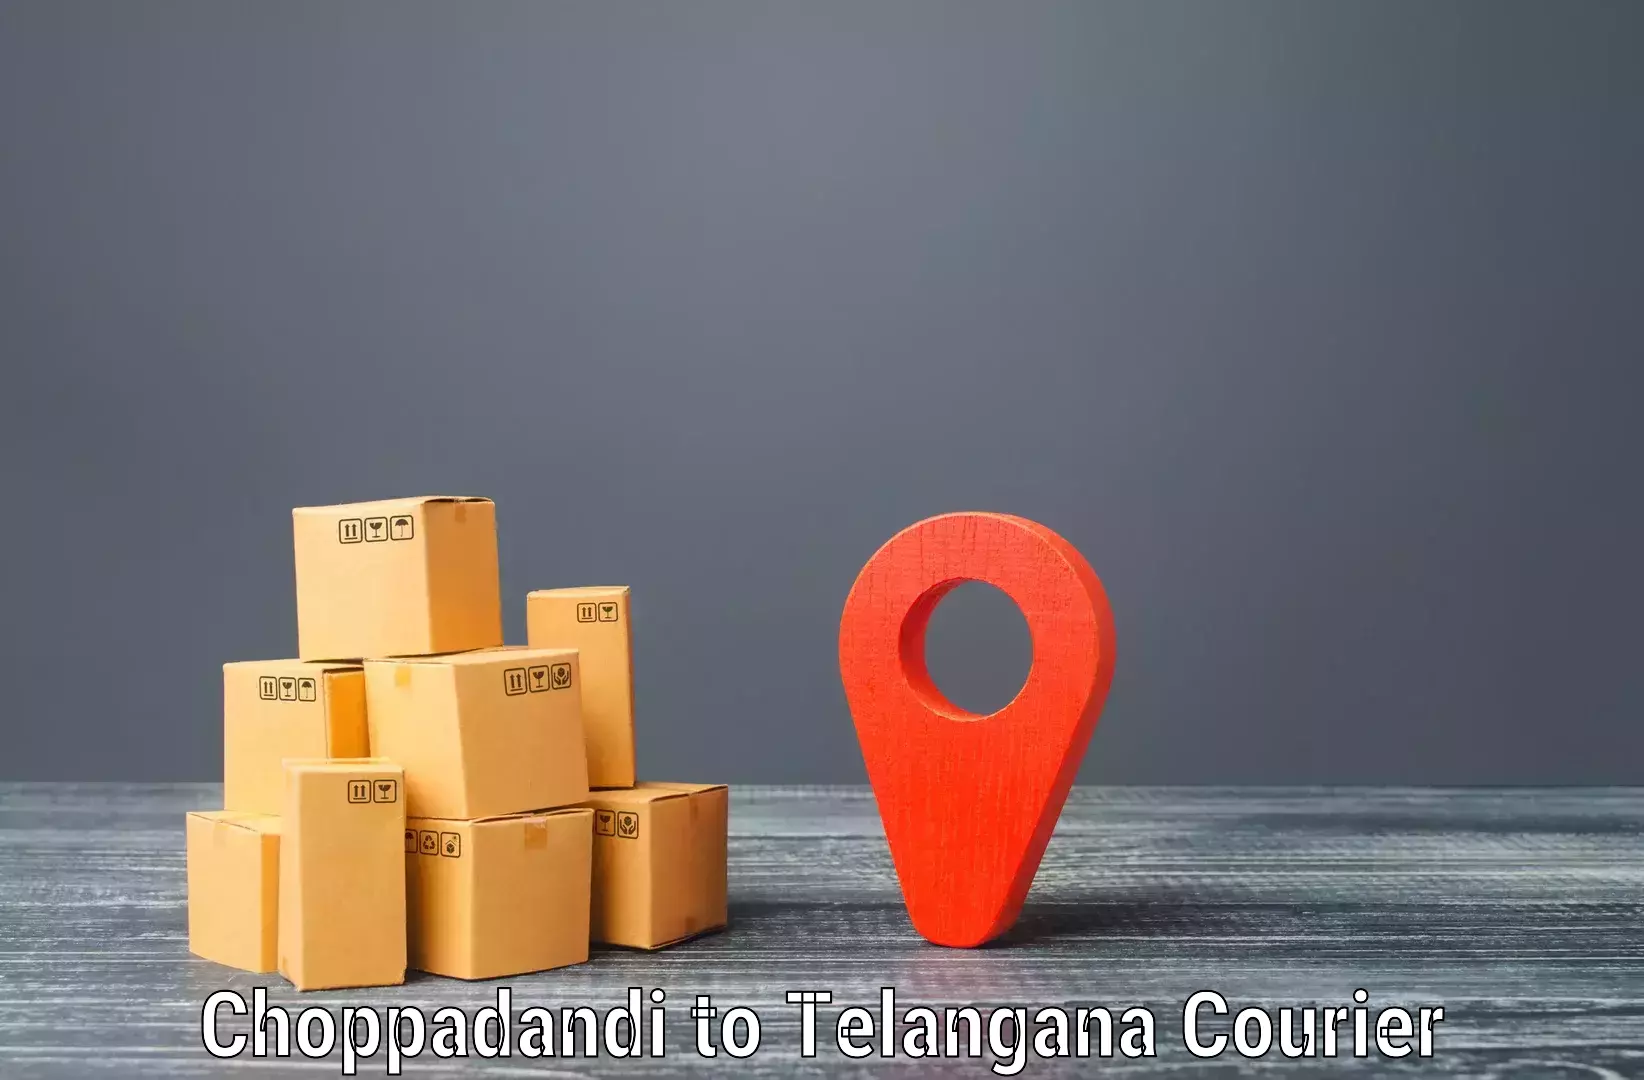 Professional delivery solutions Choppadandi to Marikal